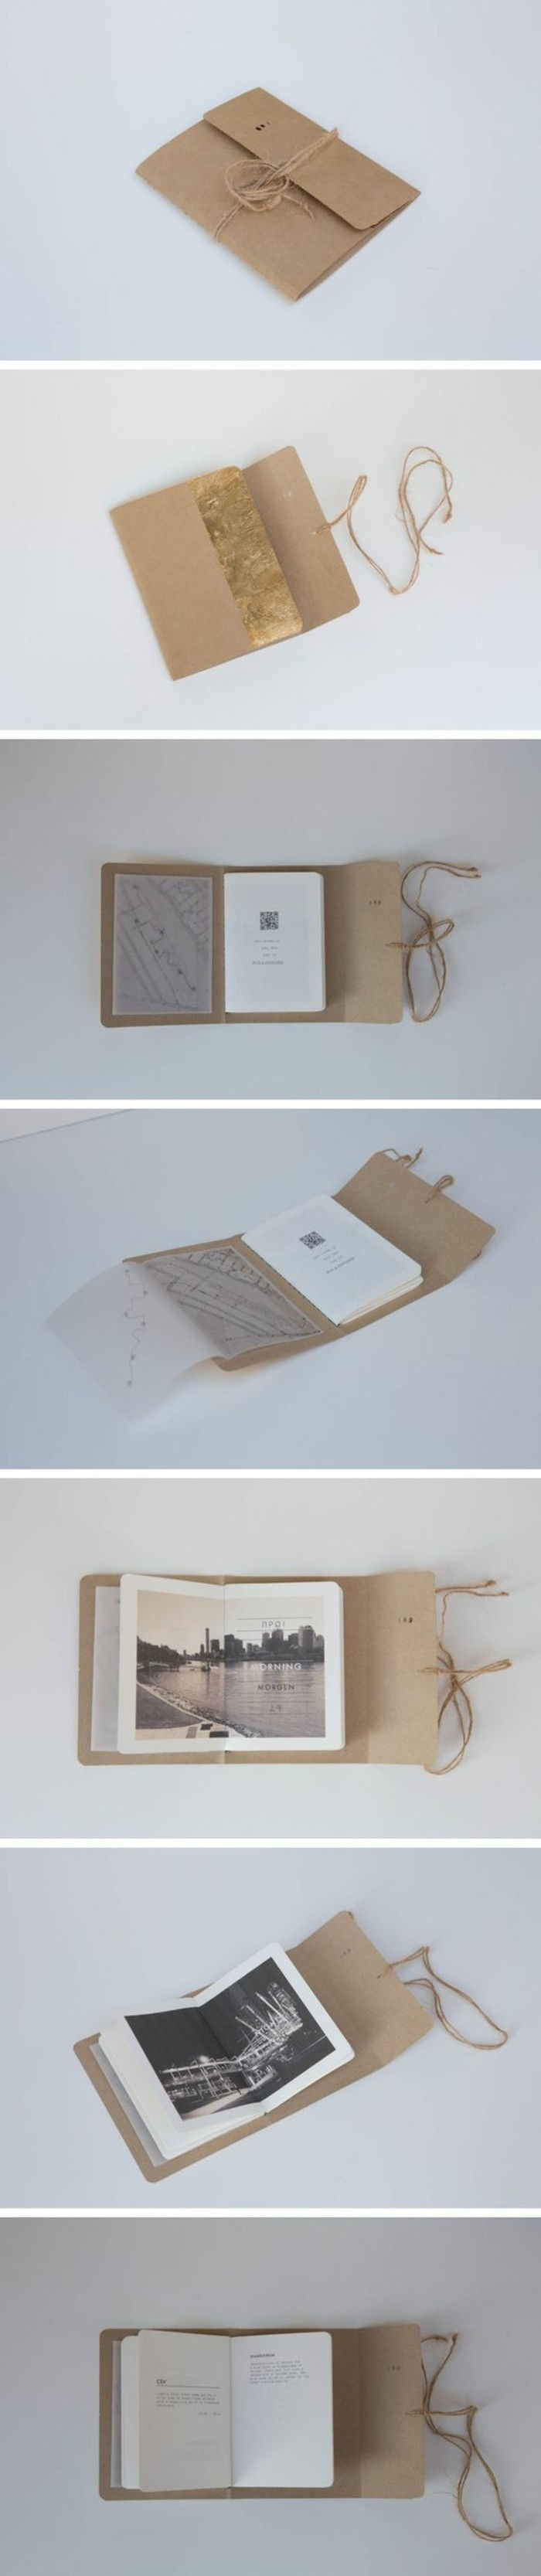 Book Obálka yourself-making book-yourself-make-paper-book sám pre výrobu obálok